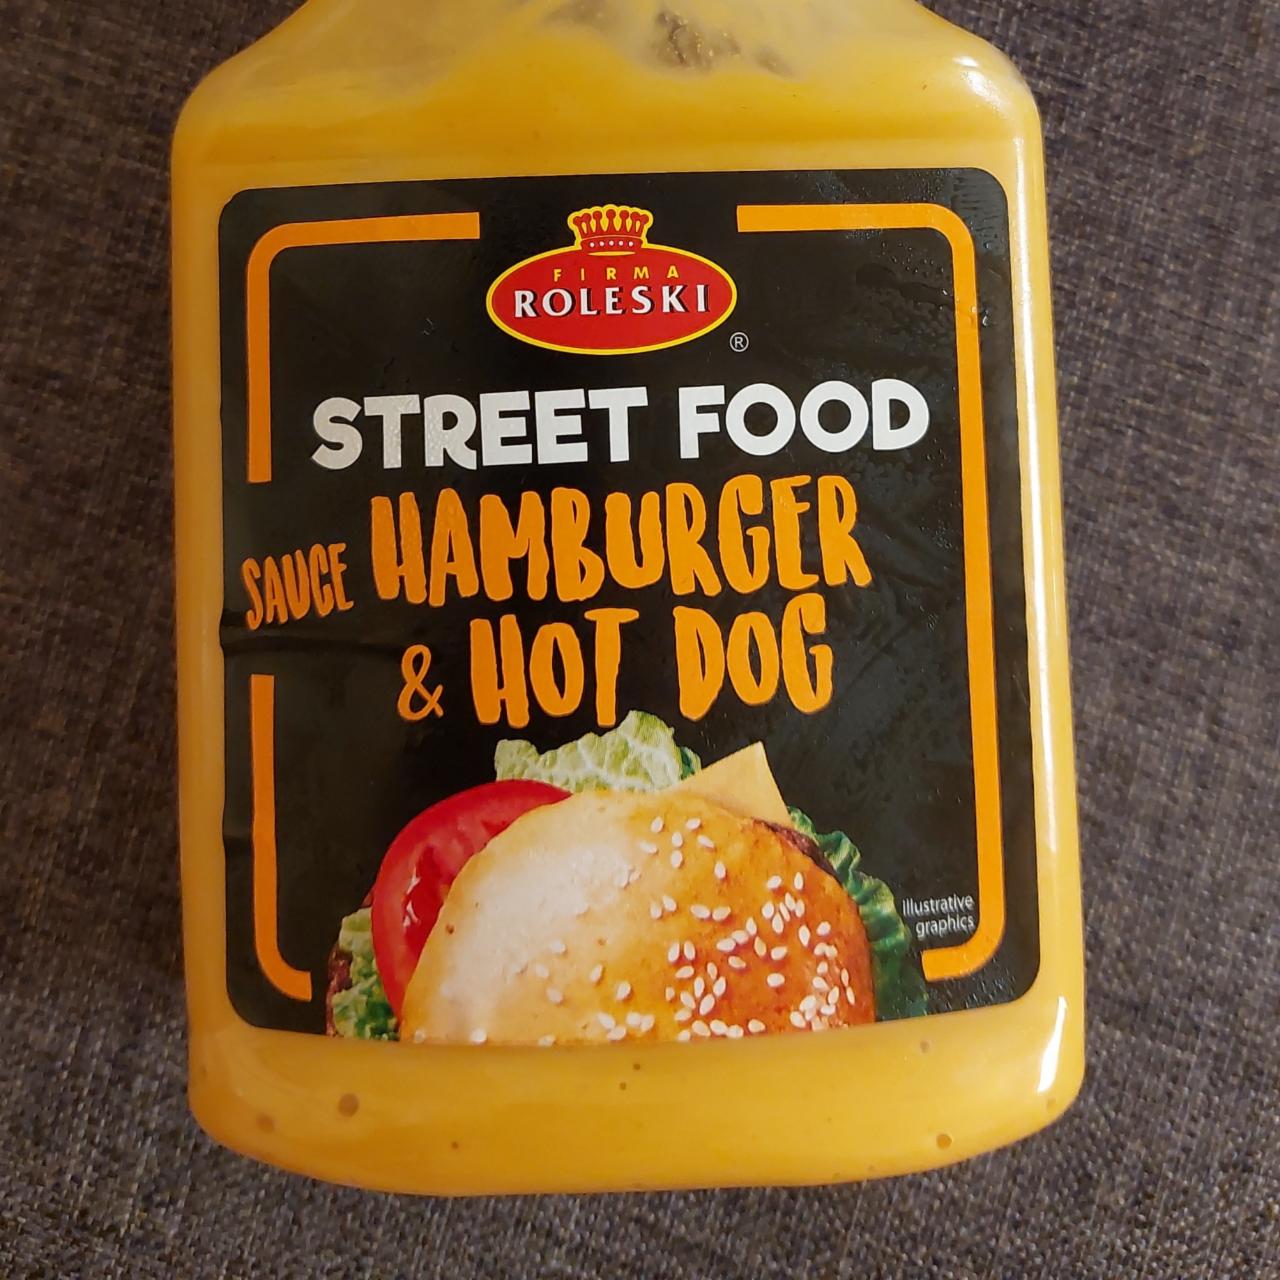 Zdjęcia - Street Food Sauce Hamburger & Hot Dog Firma Roleski